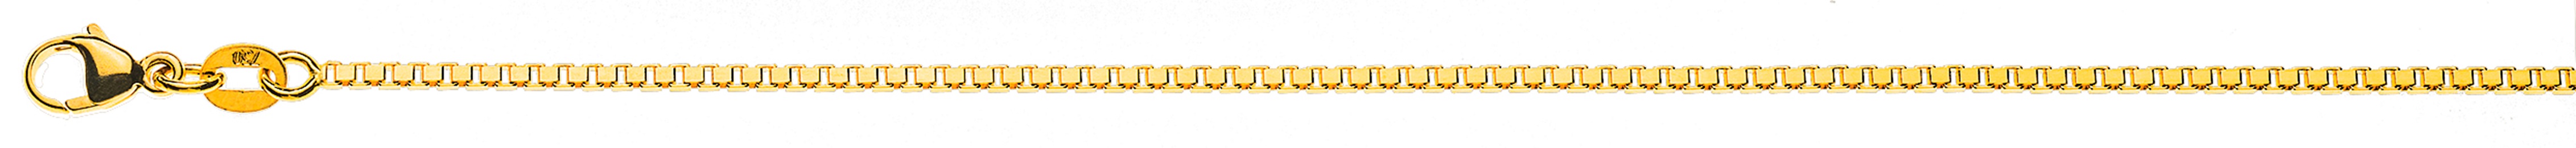 AURONOS Style Necklace yellow gold 9K Venetian chain diamond cut 55cm 1.4mm